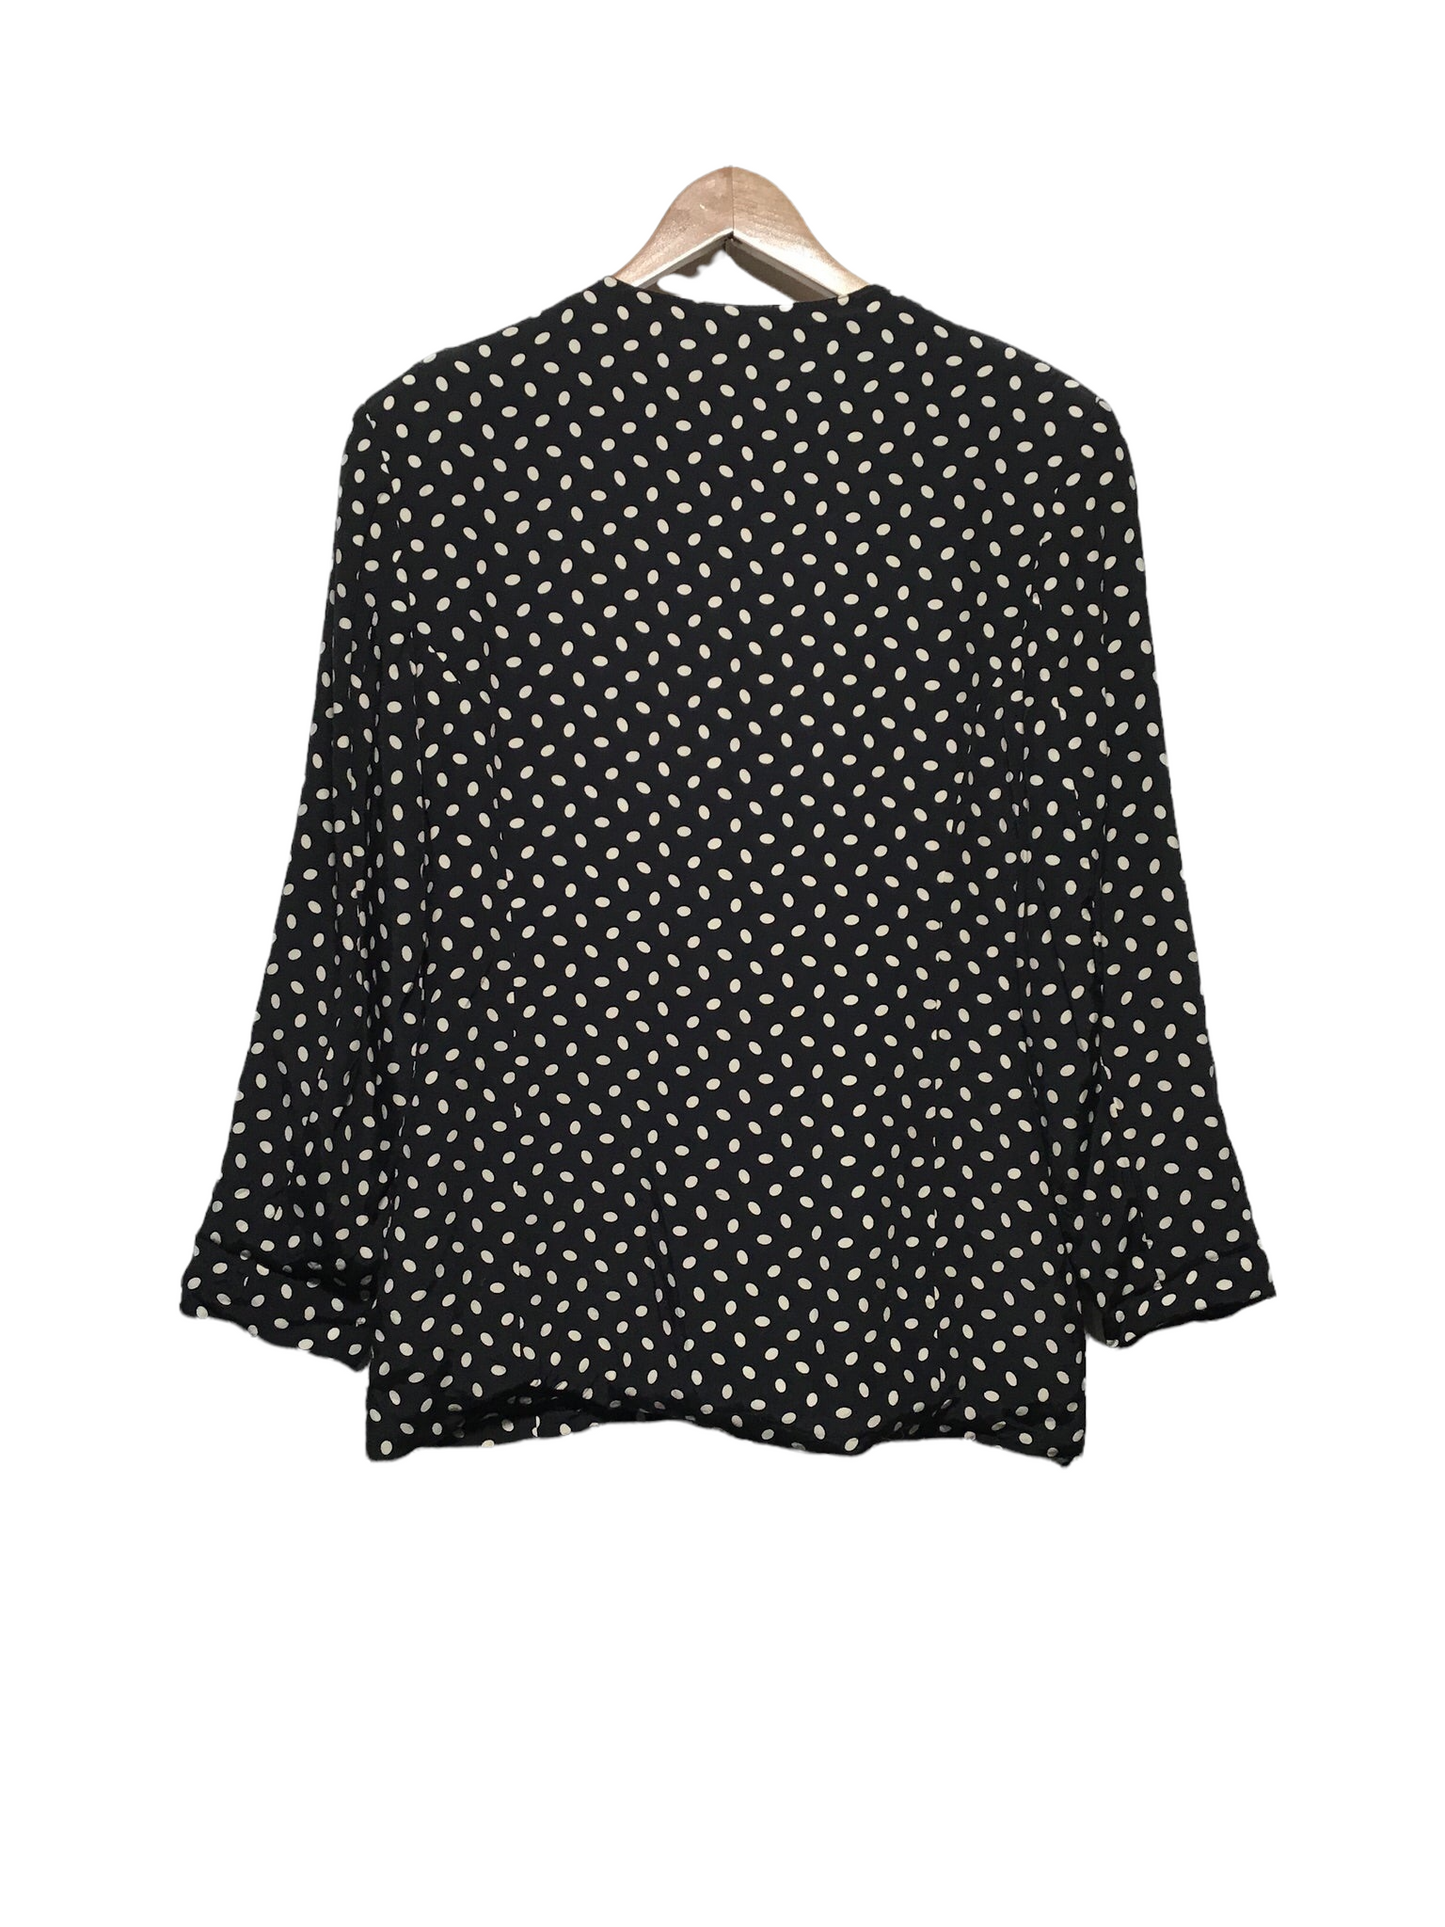 Polka Dot Blouse/ Jacket (Size M)